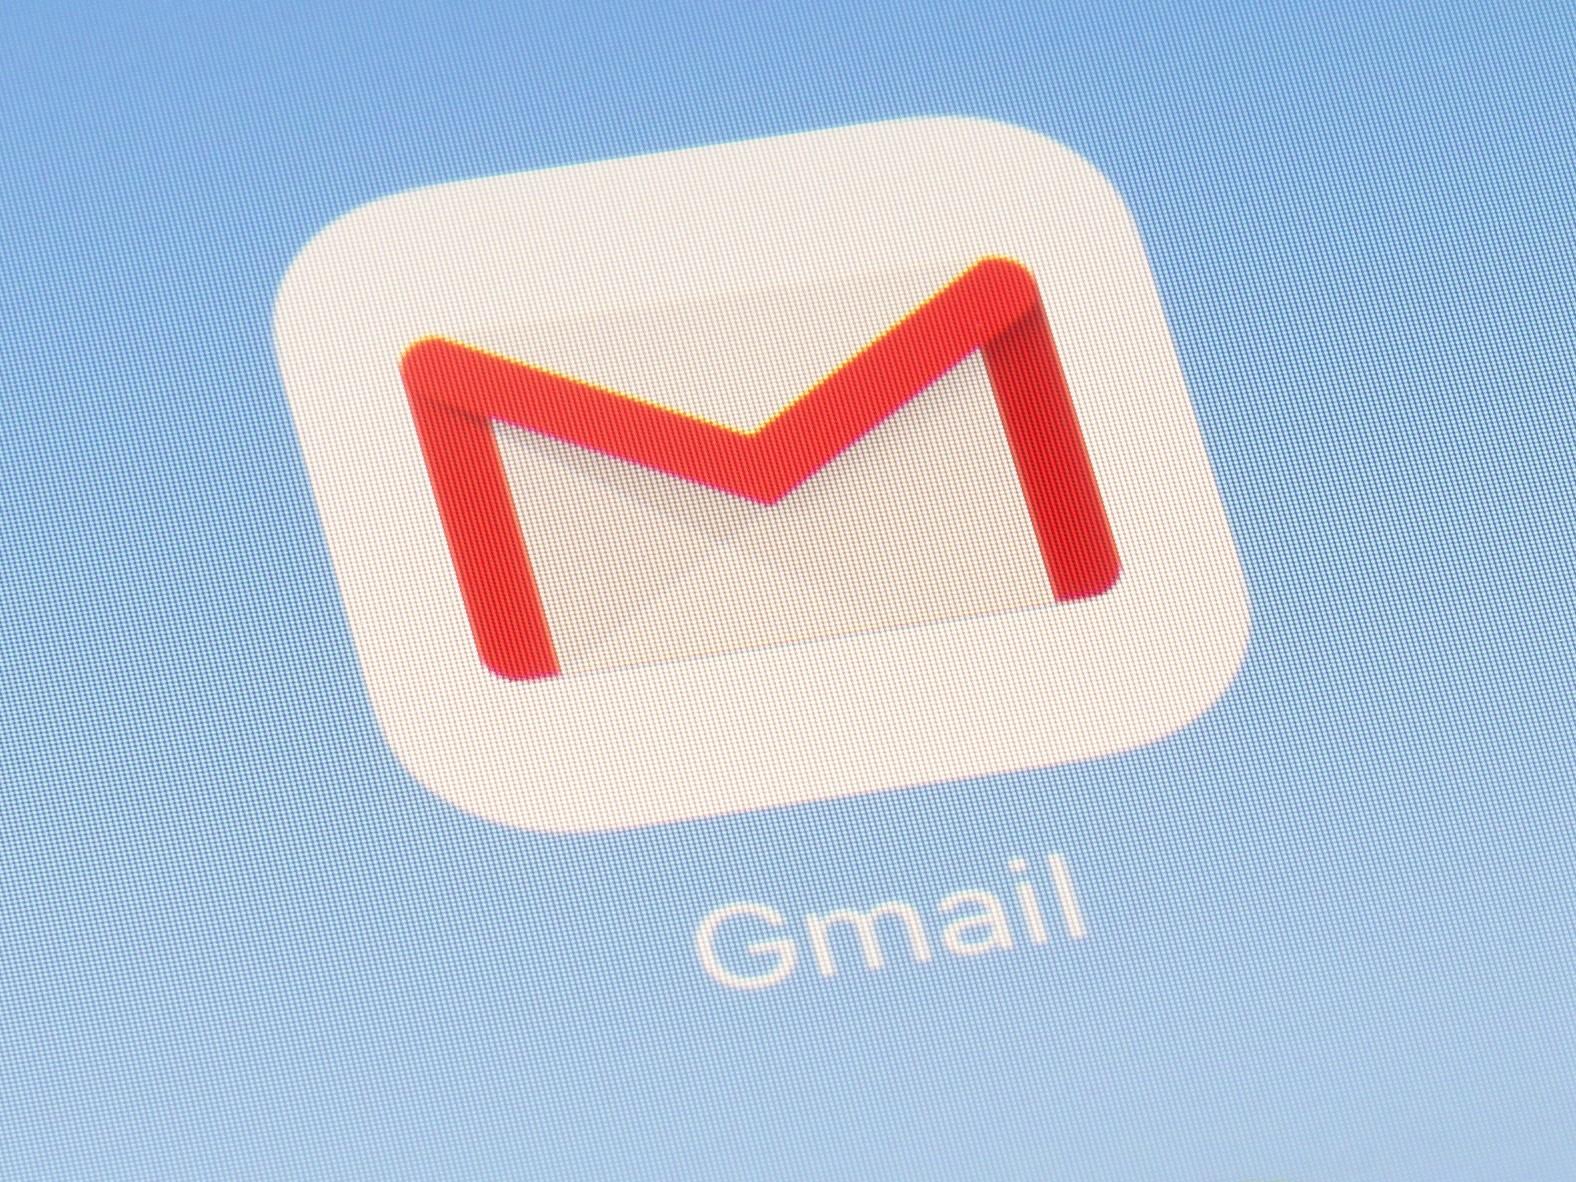 Gmail f f. Gmail картинка. Гмайл людей. Красивая картинка gmail.